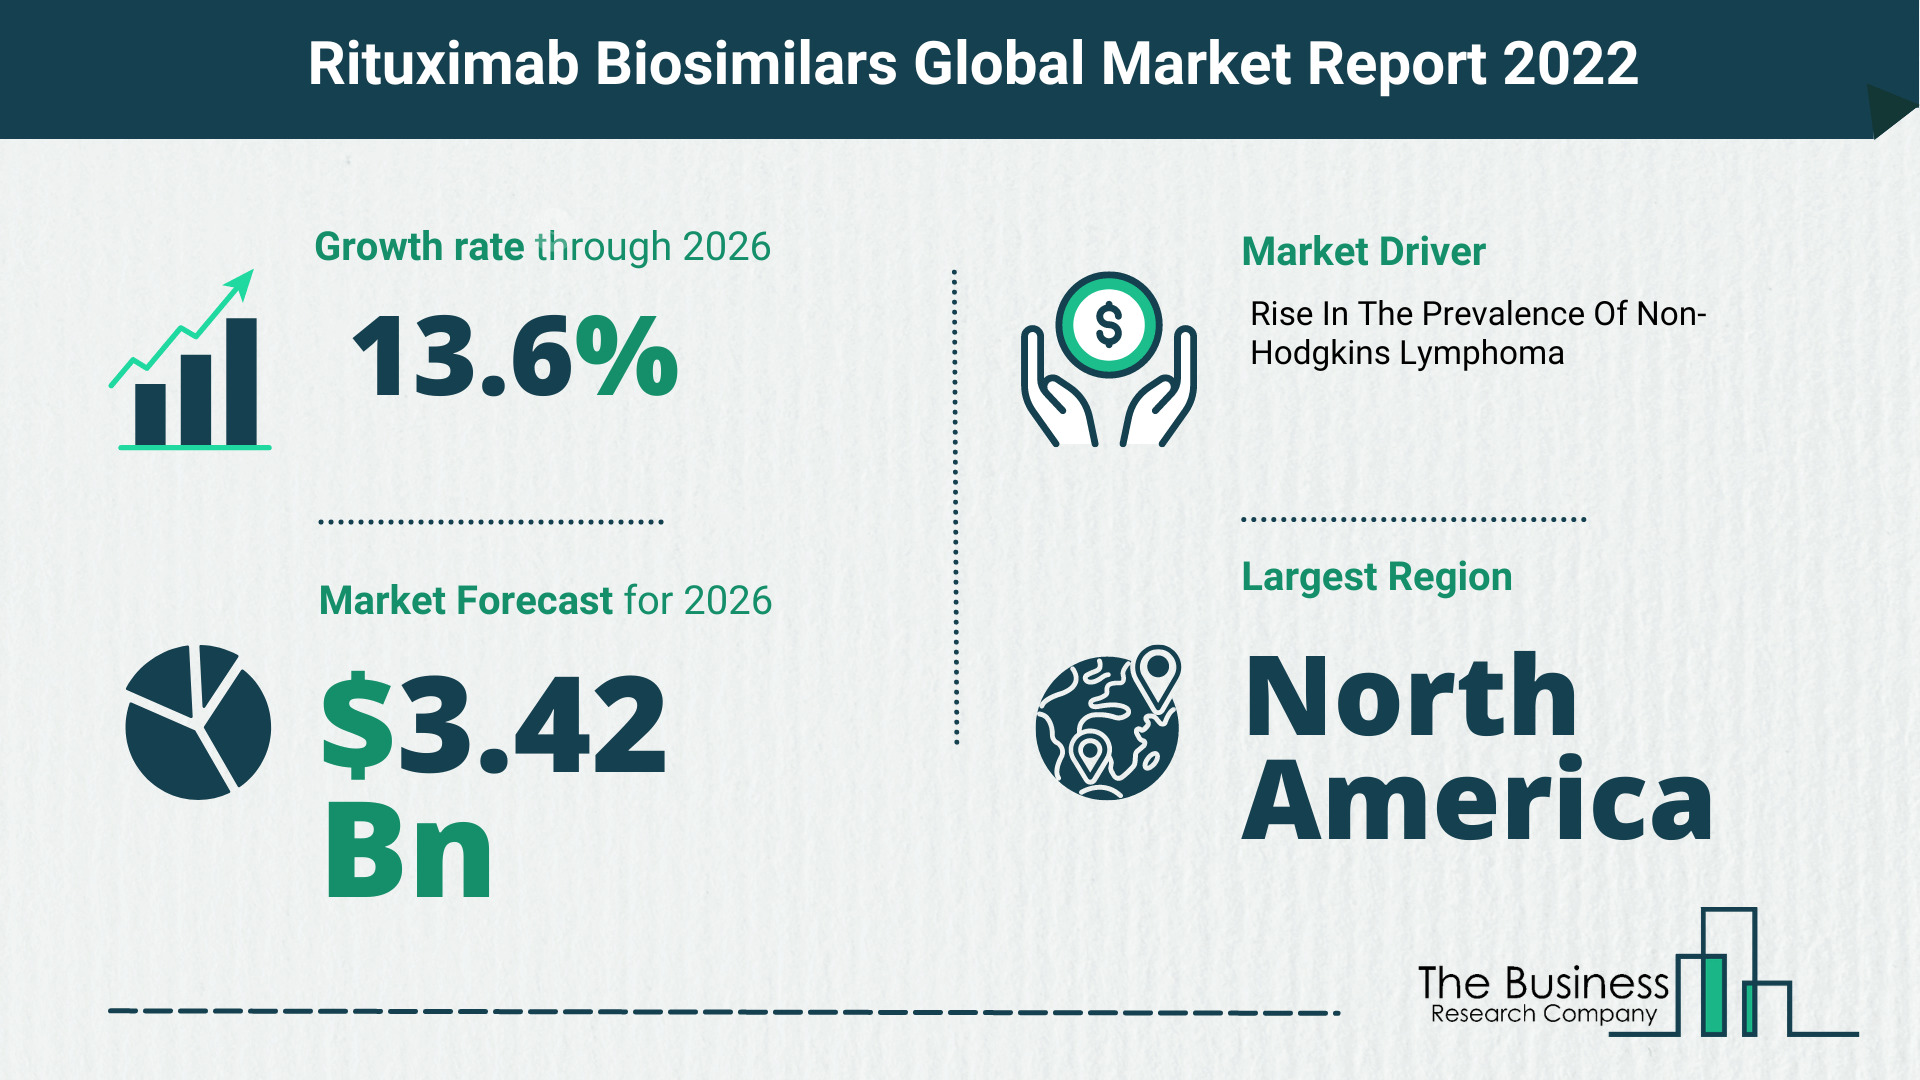 Global Rituximab Biosimilars Market